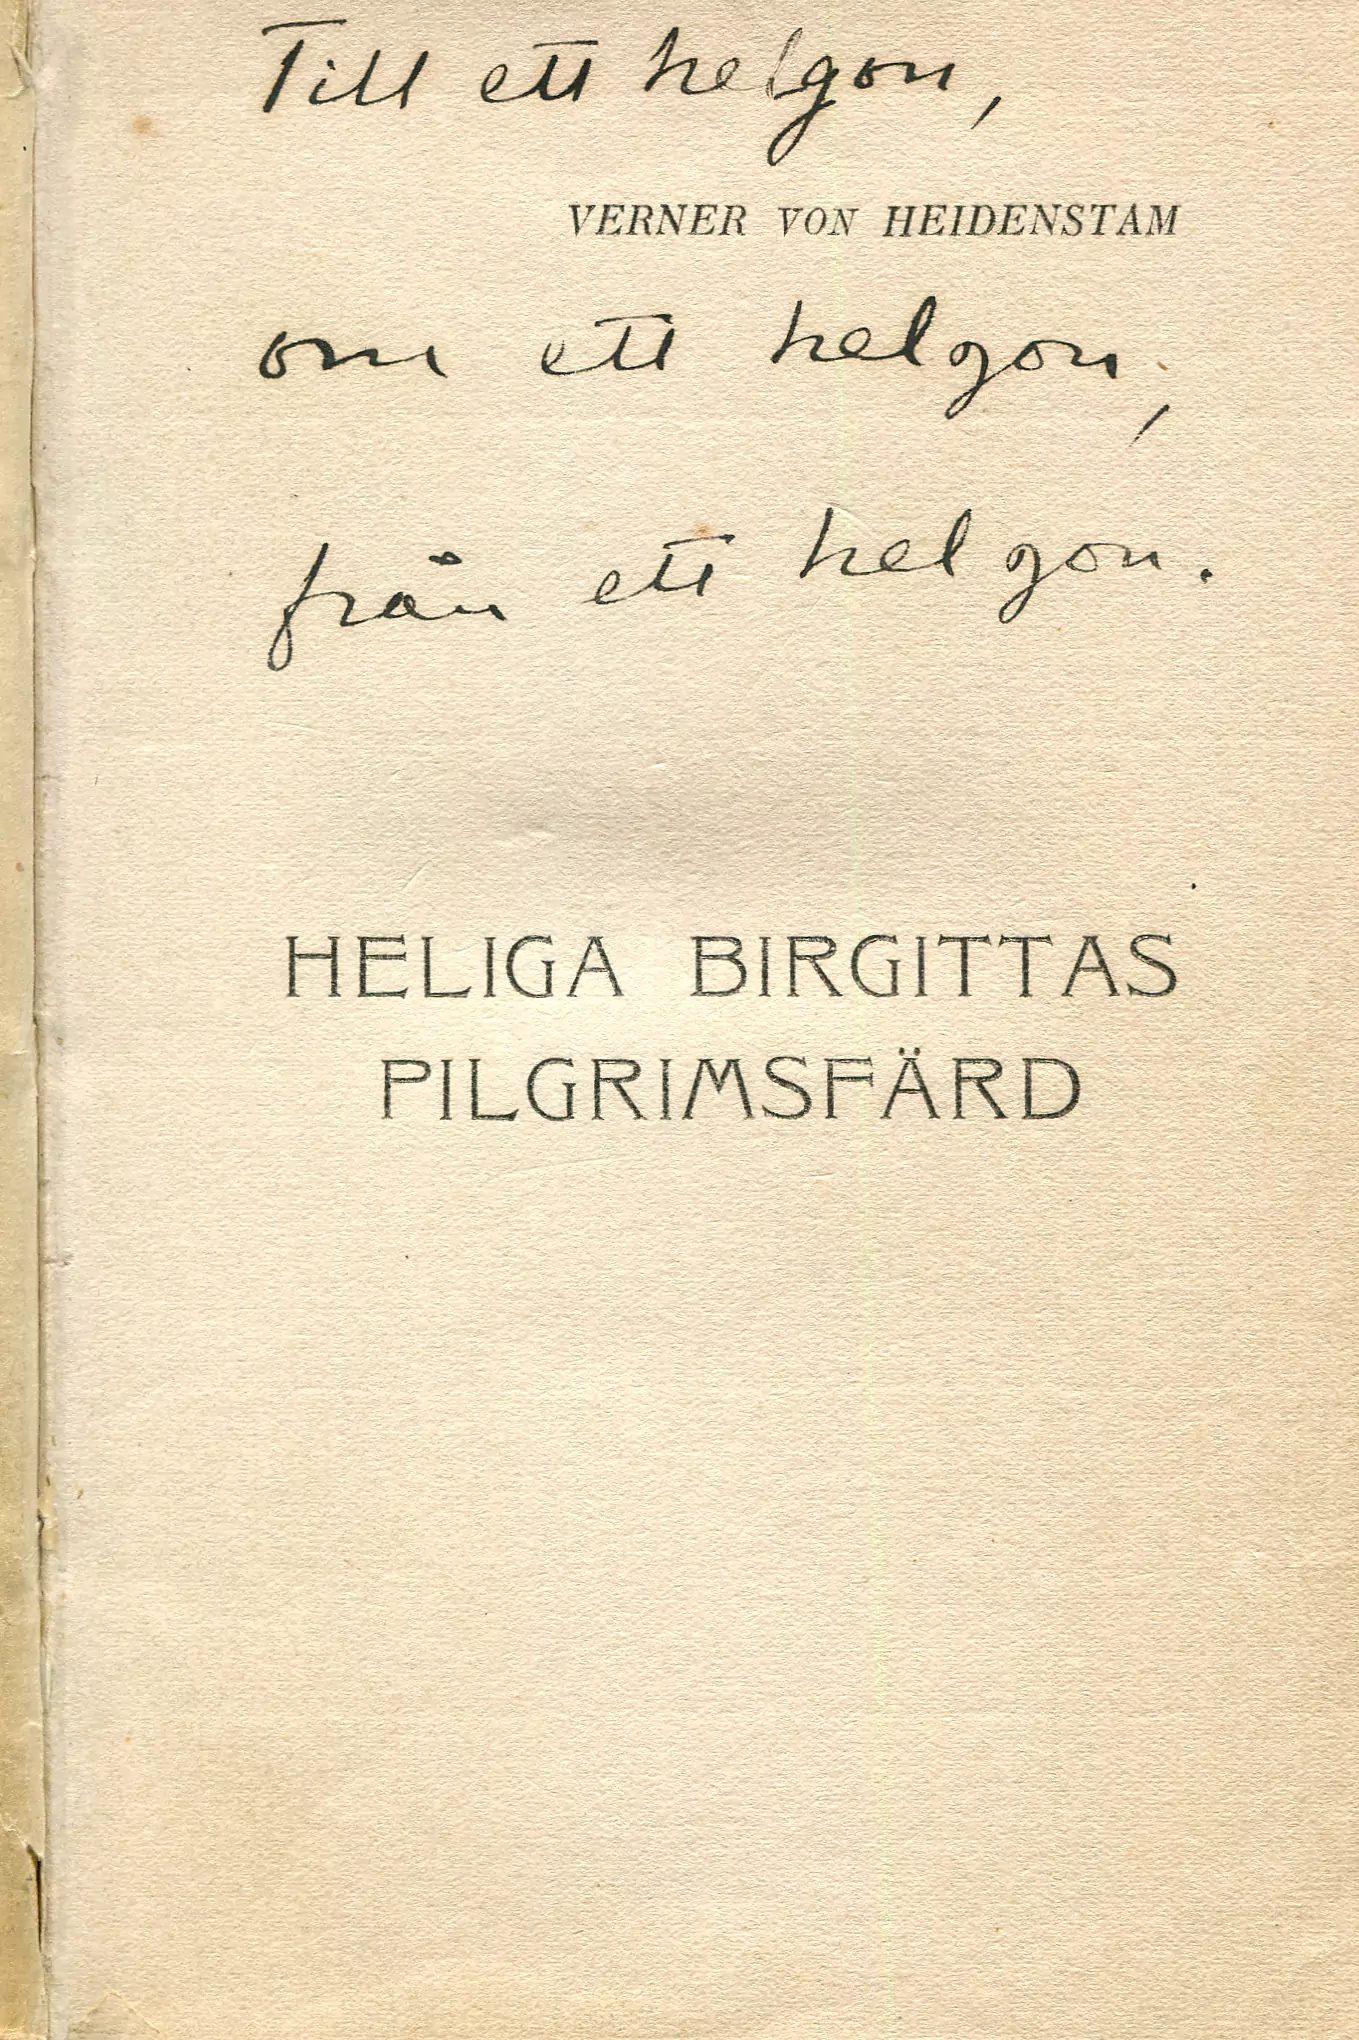 Heliga Birgittas pilgrimsfärd , Stockholm 1901